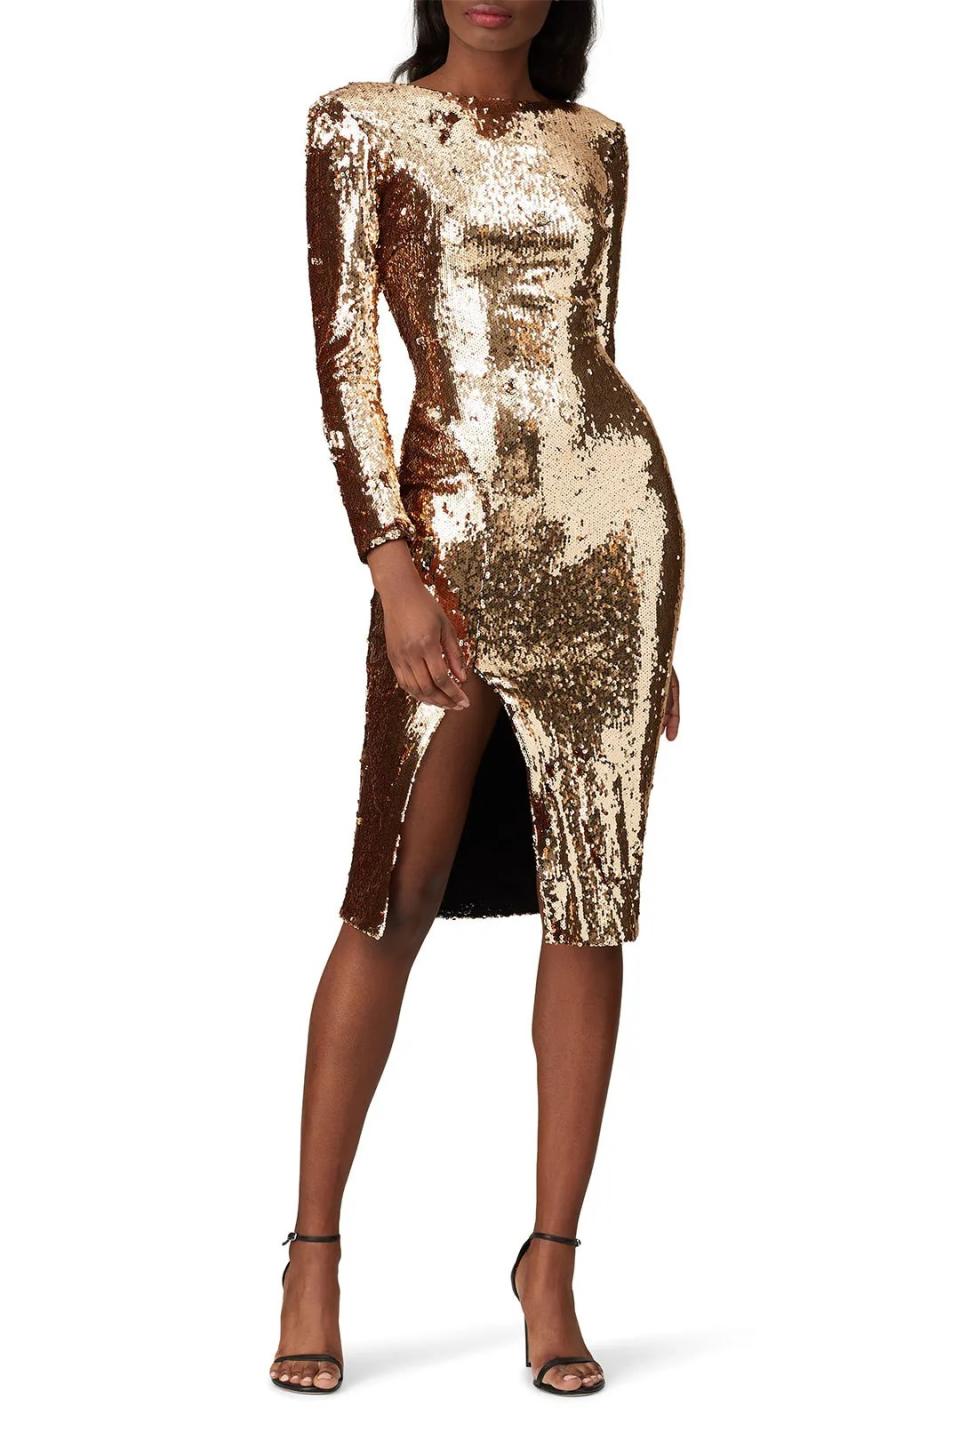 model wearing gold sequin midi dress